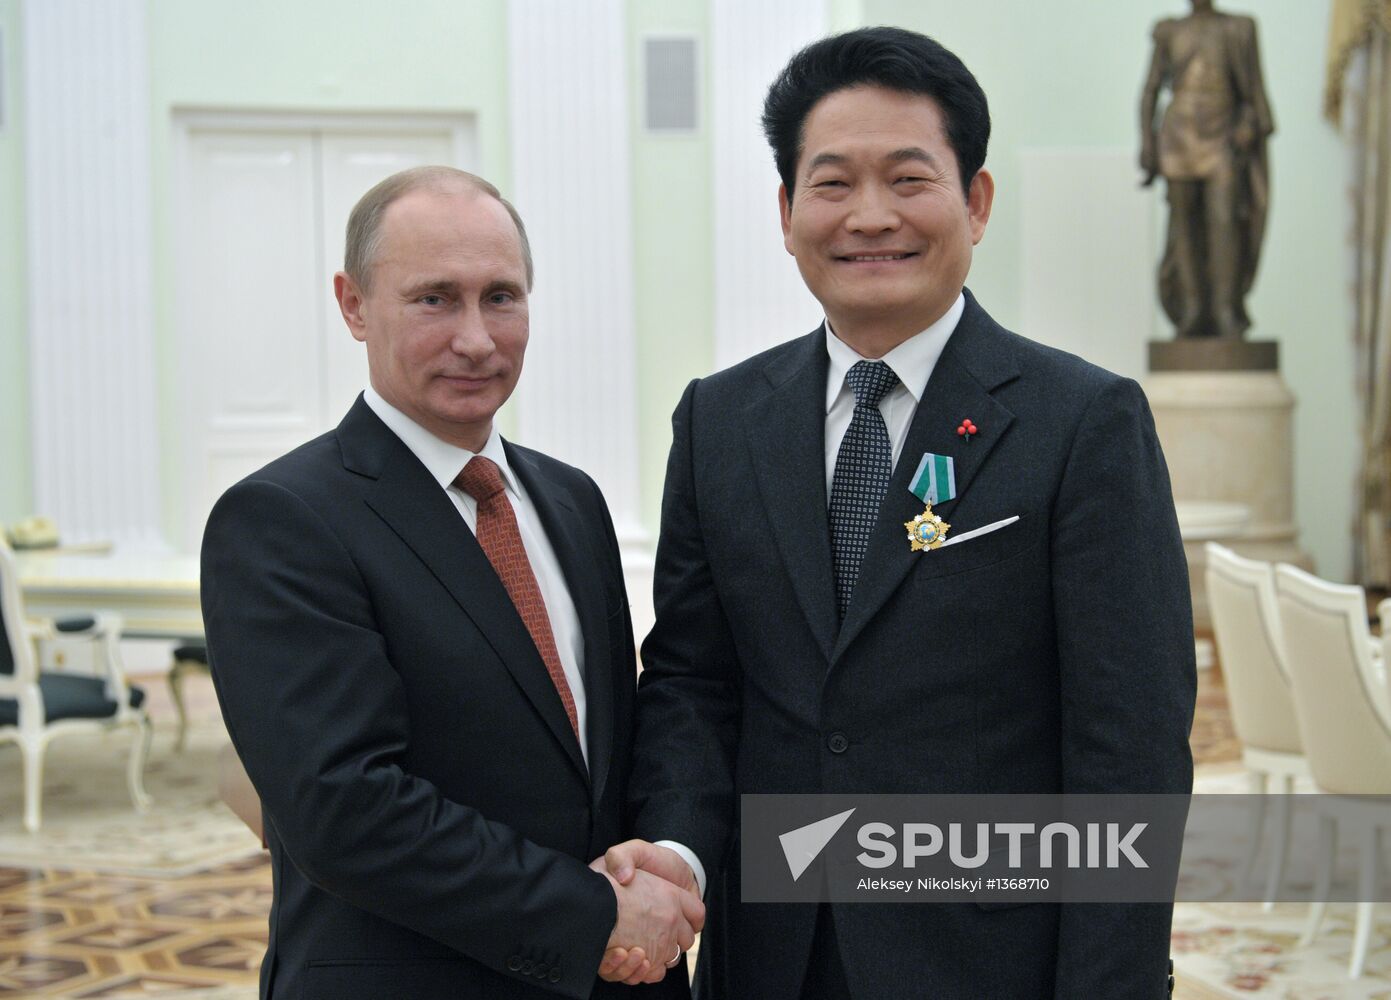 Vladimir Putin hands out state awards in Kremlin